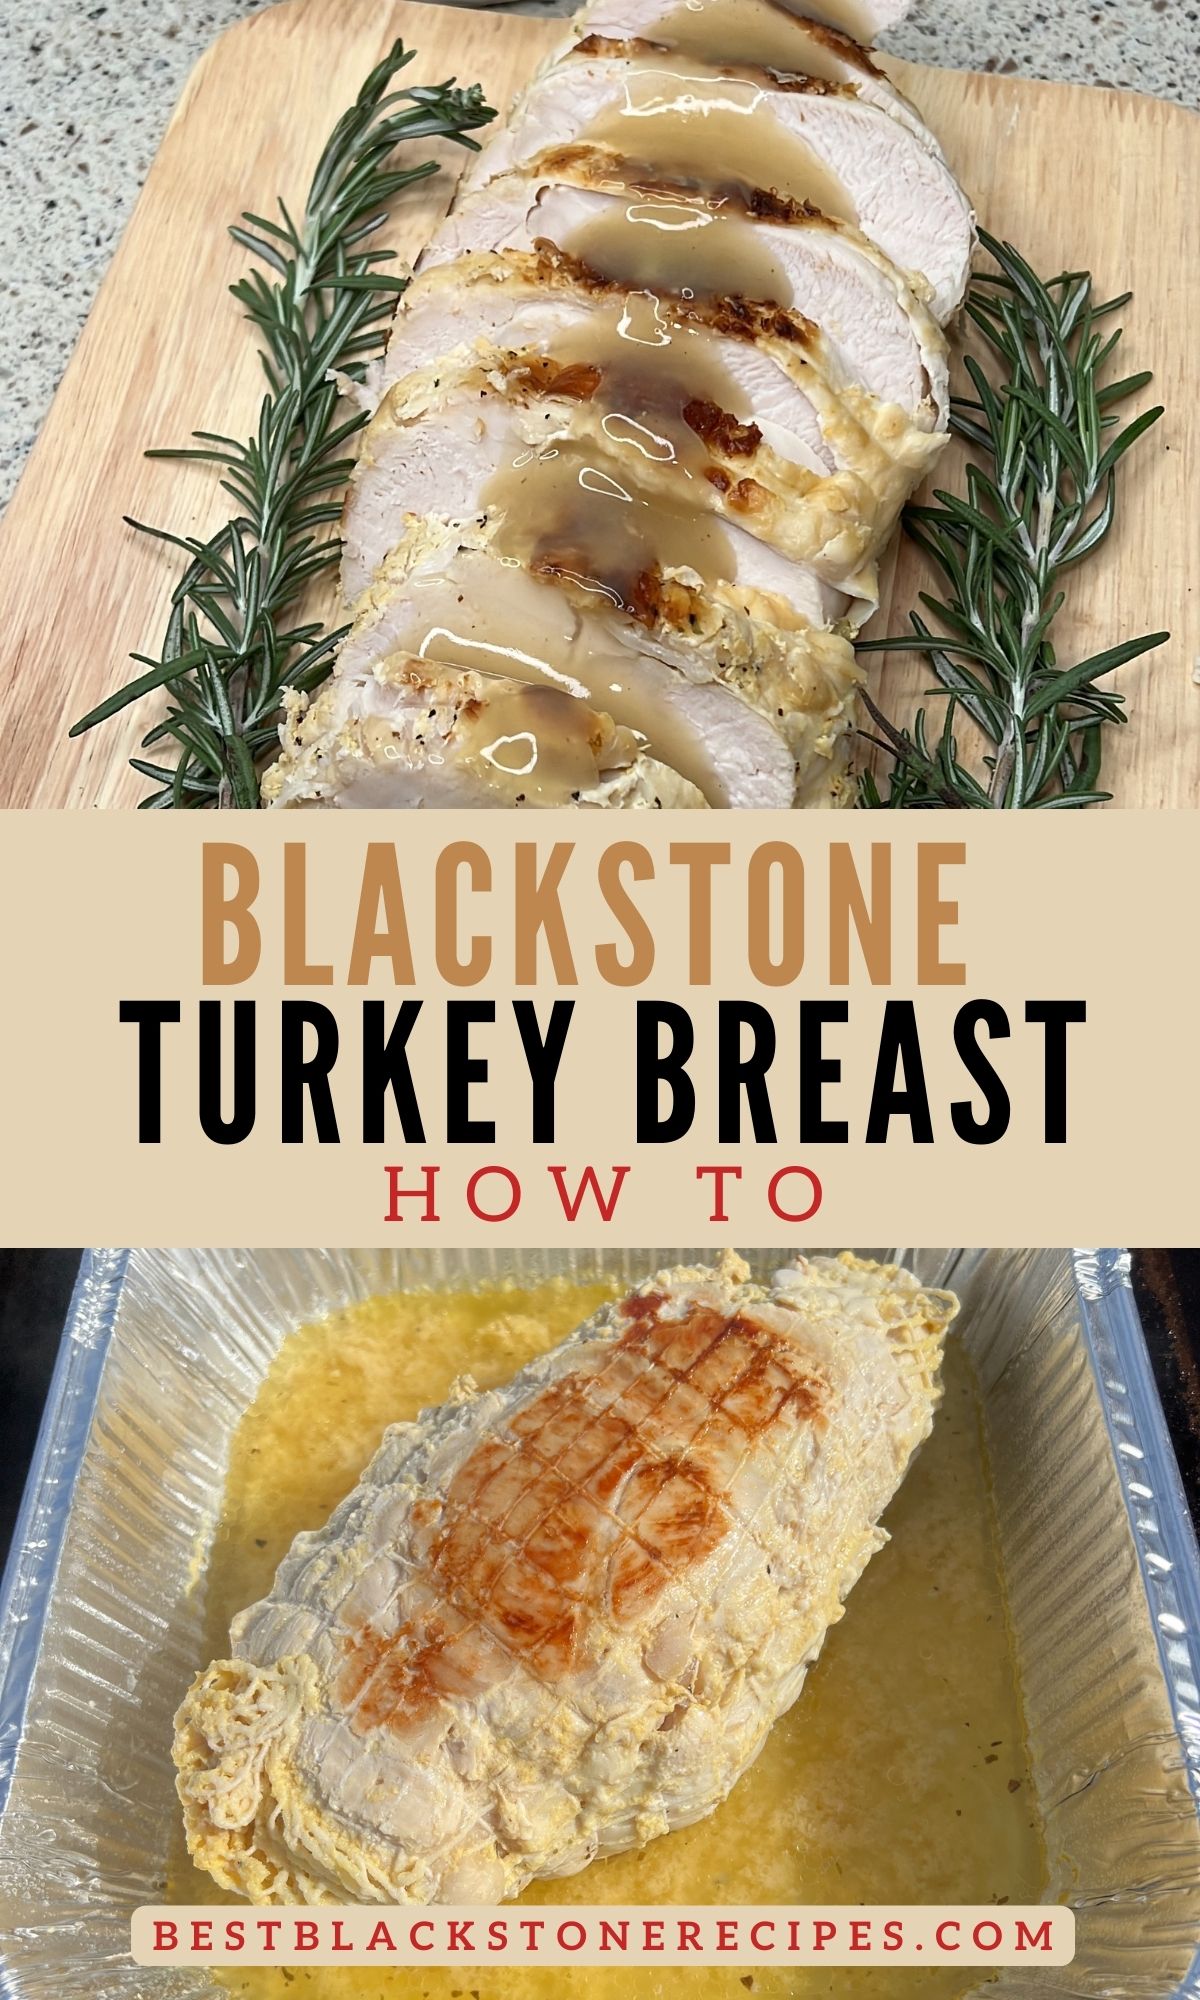 Blackstone turkey breast how to make.